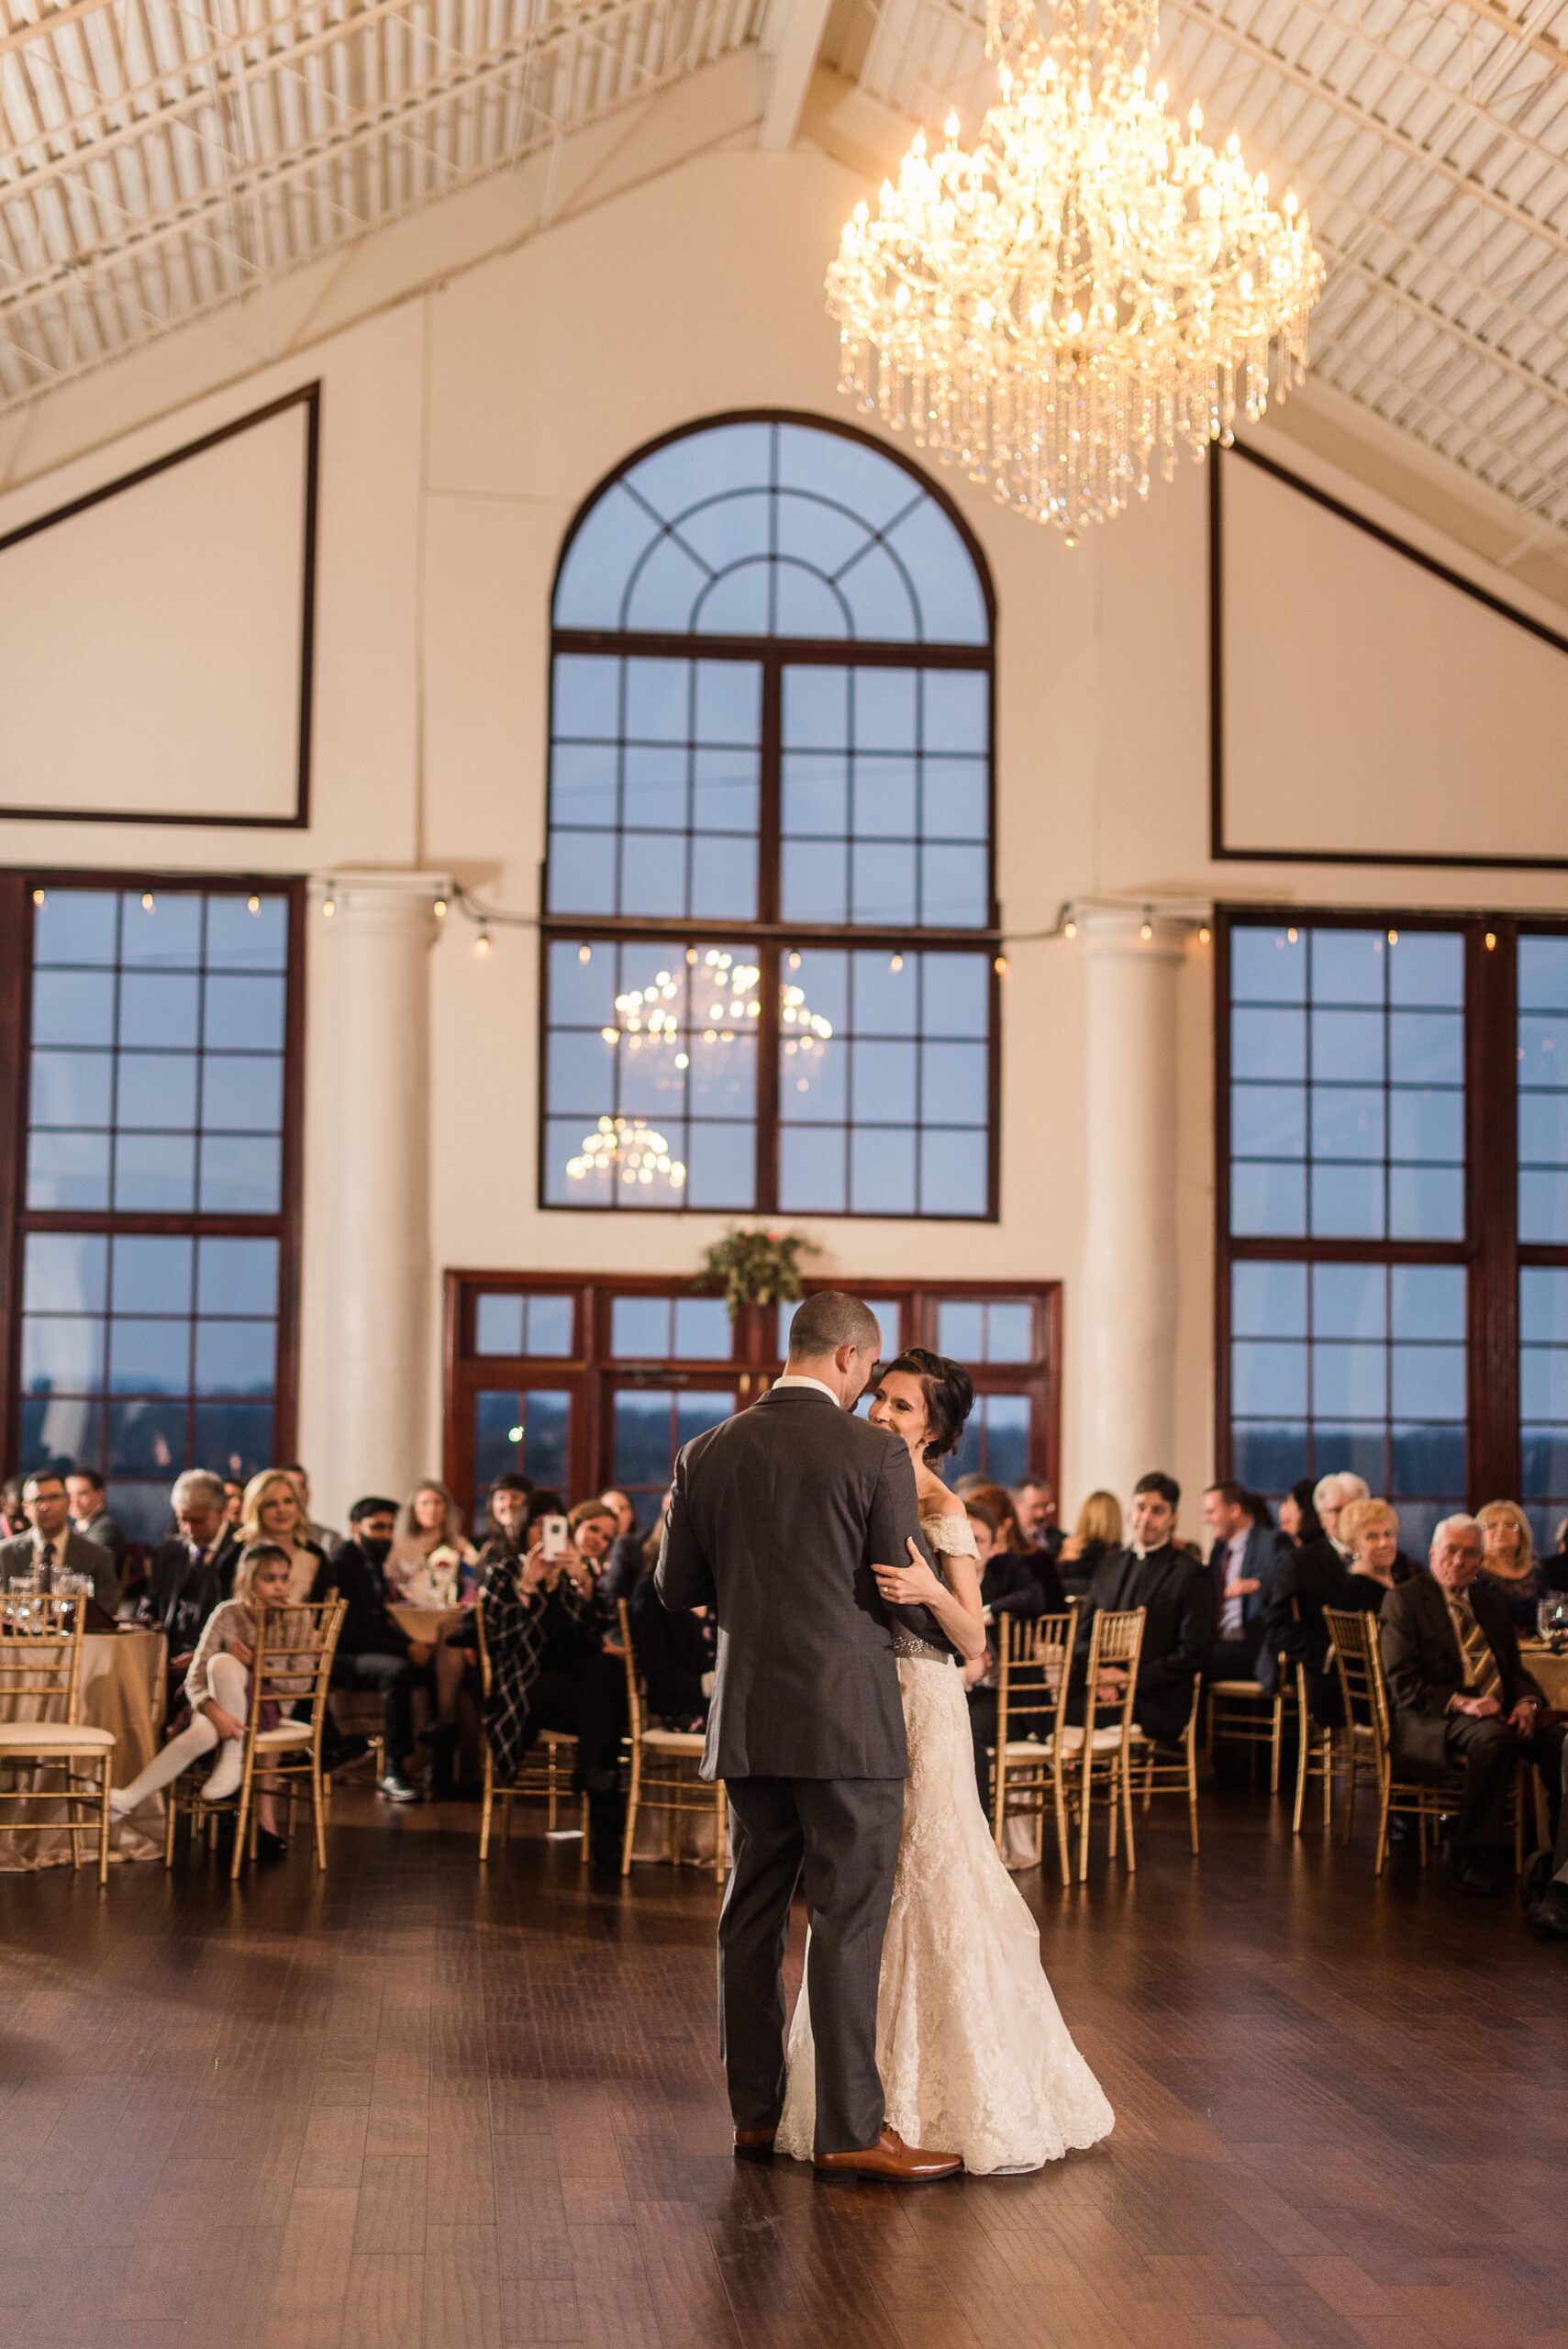 A bride and groom share their first dance during their ballroom wedding at Raspberry Plain Manor in Loudoun County Virginia